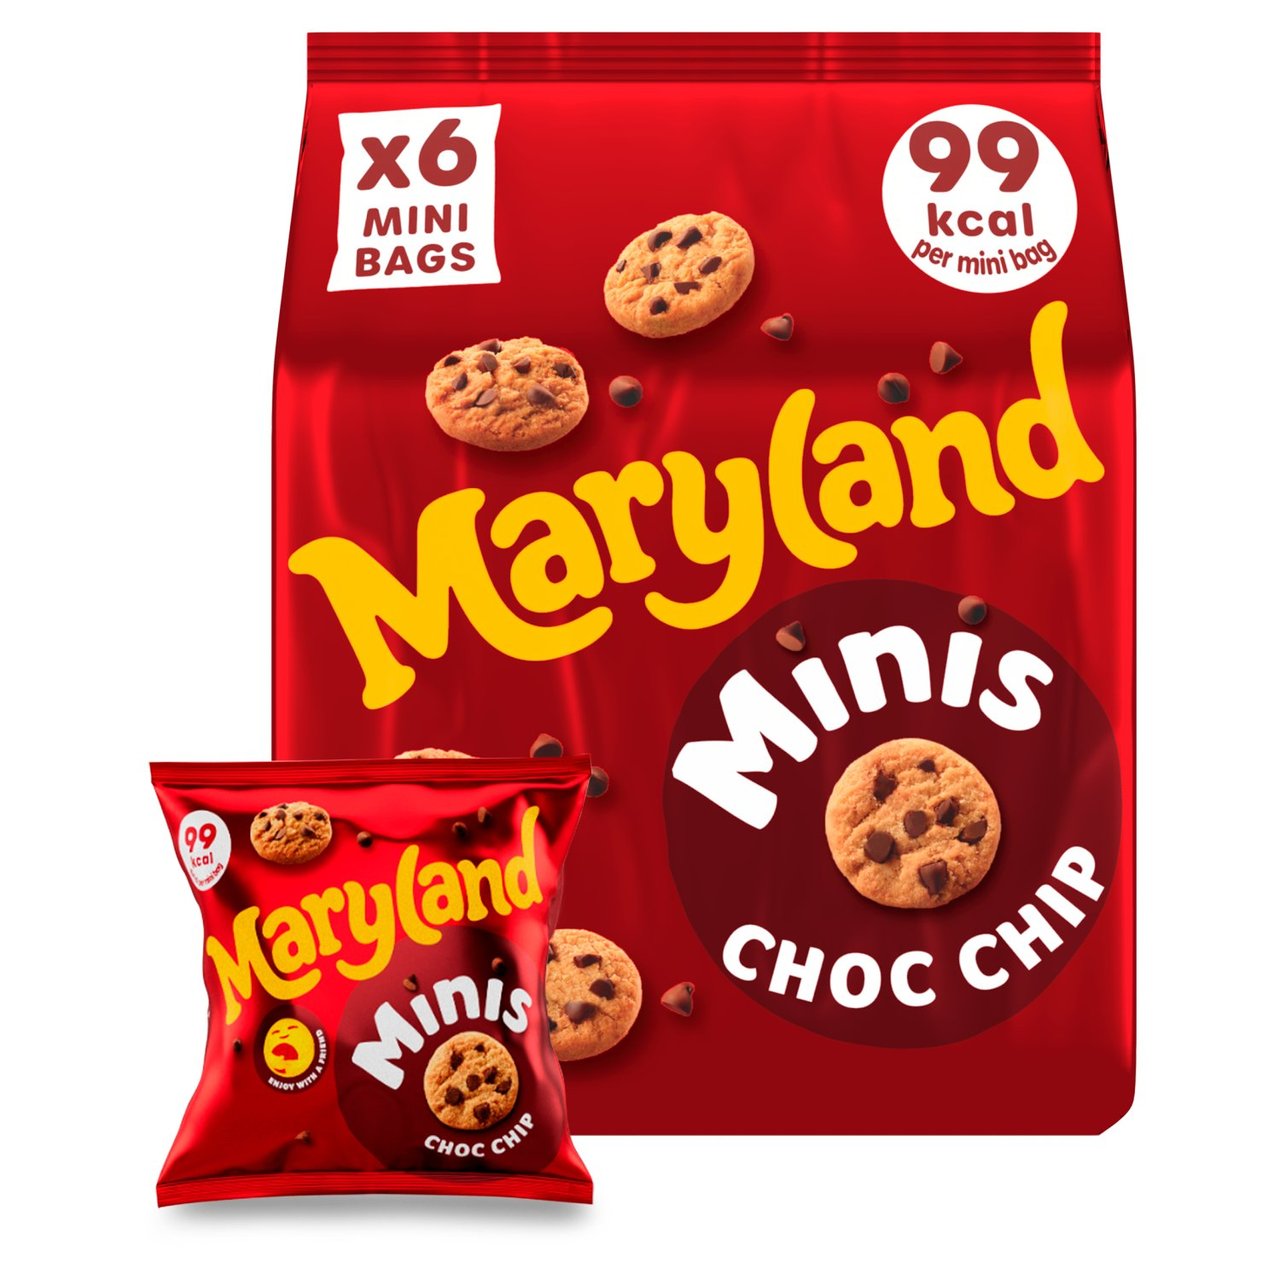 Maryland Minis Choc Chip Cookies 6pk*